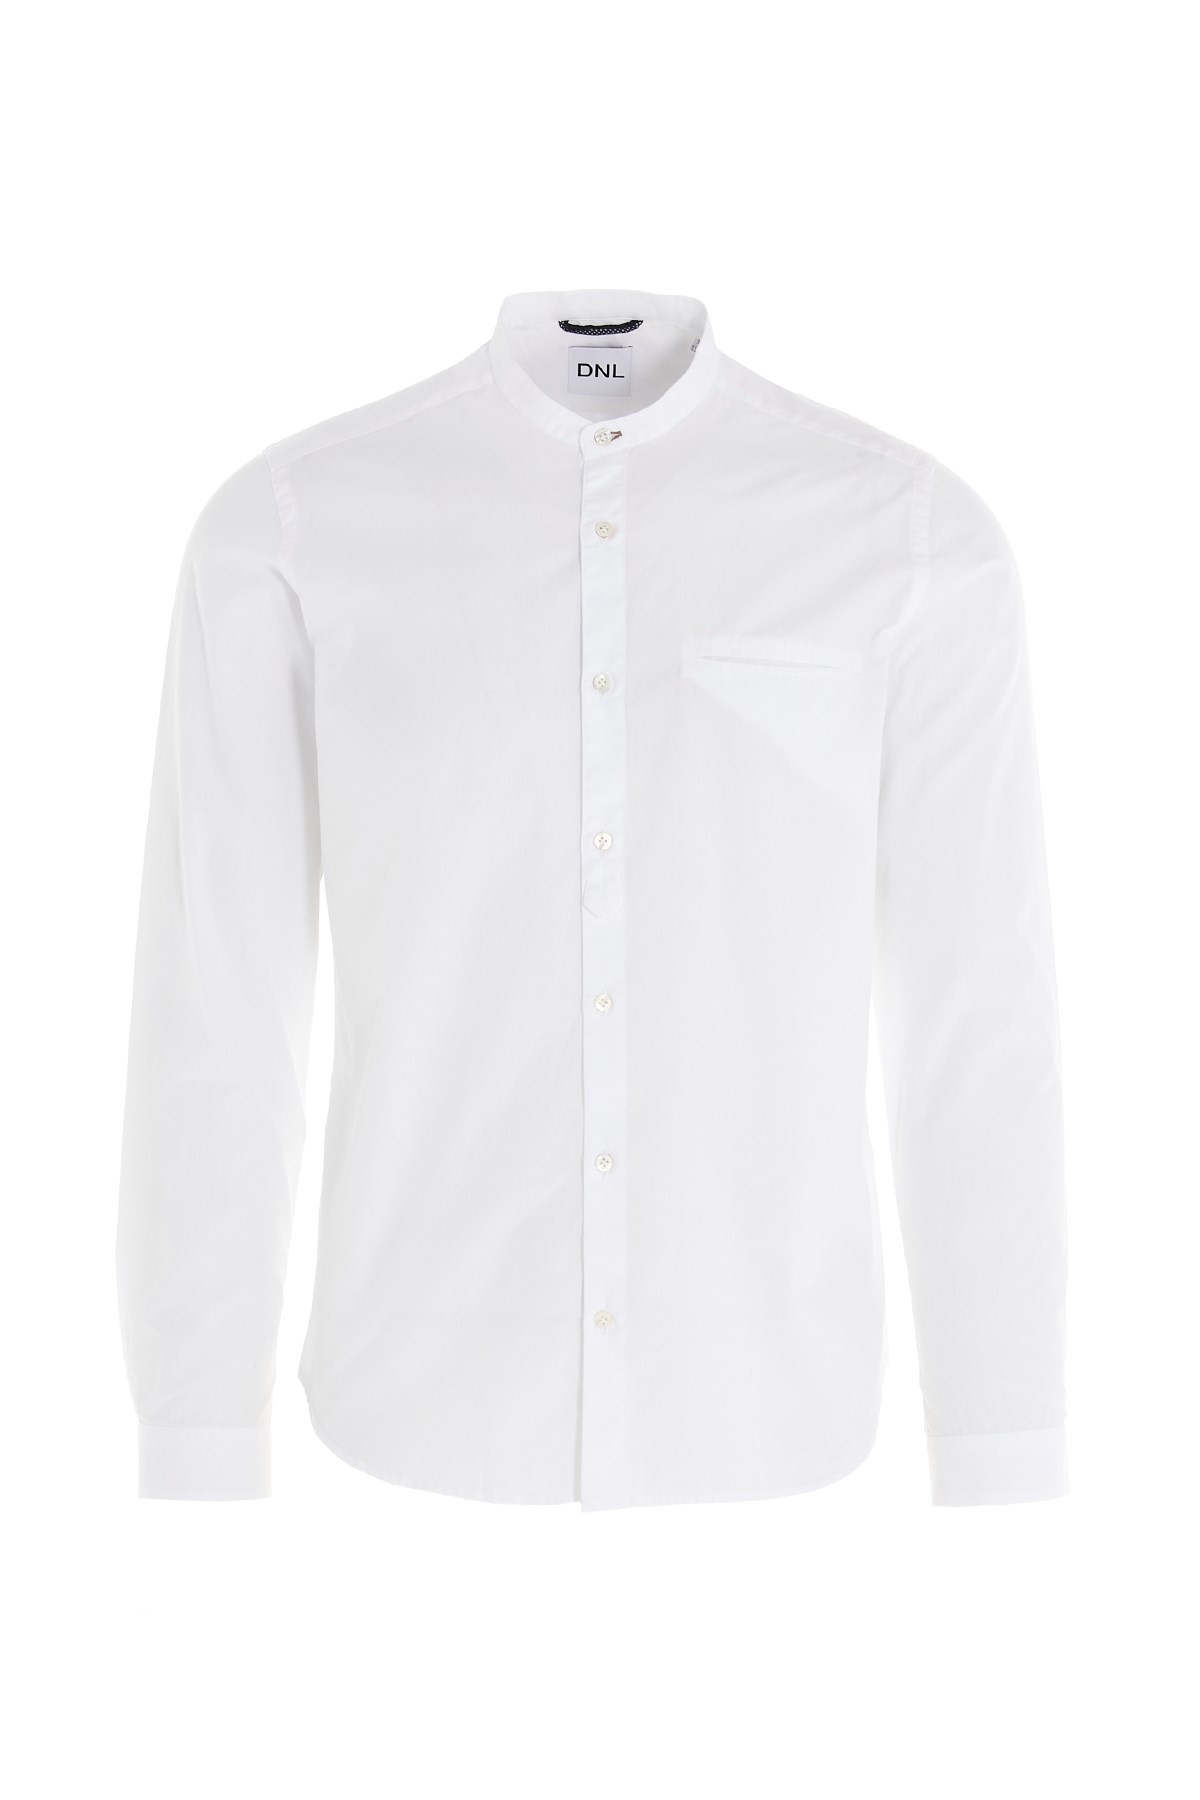 DNL Mandarin Collar Cotton Shirt